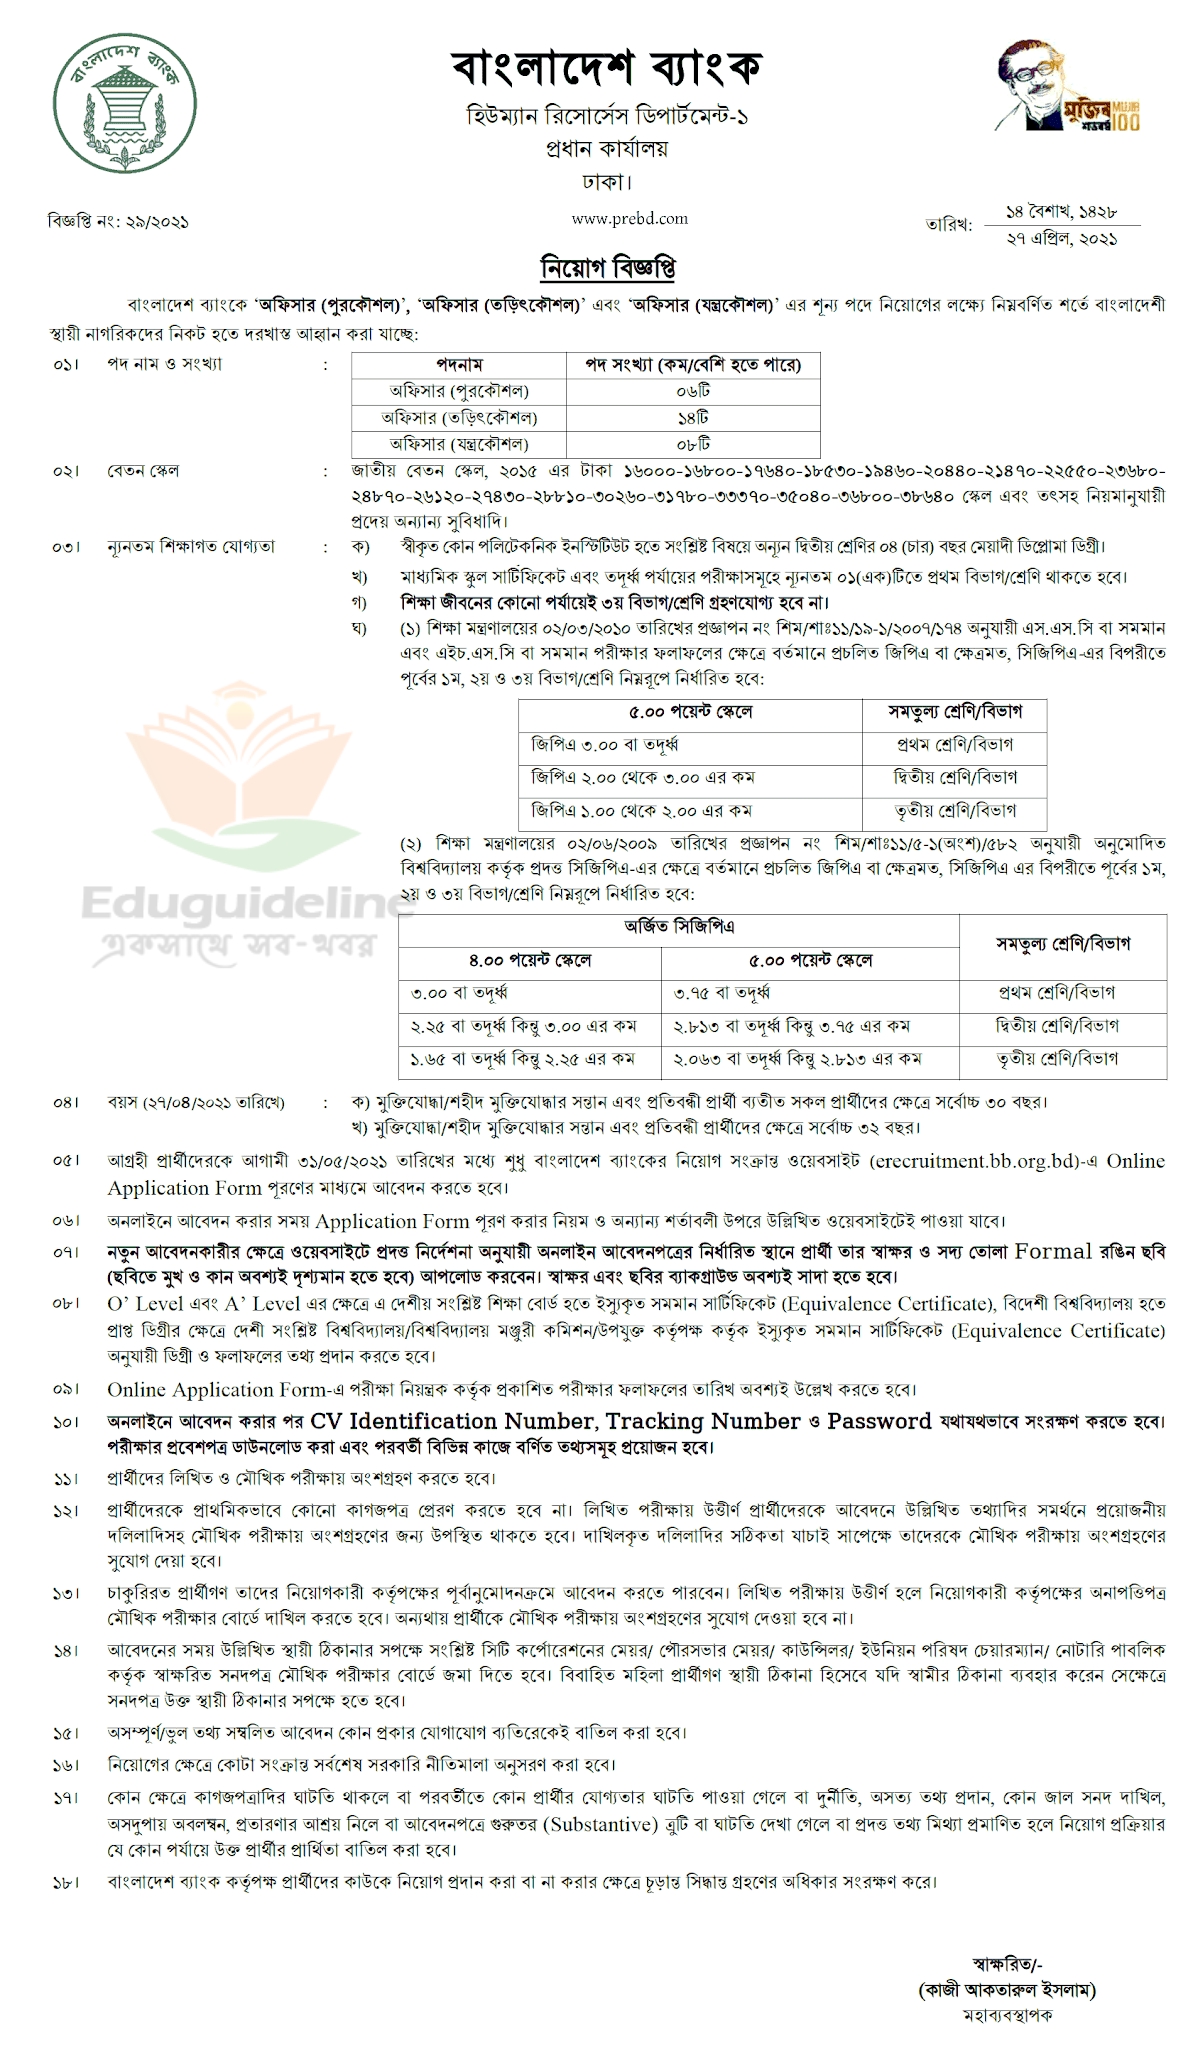 BANGLADESH bank job circular 2021